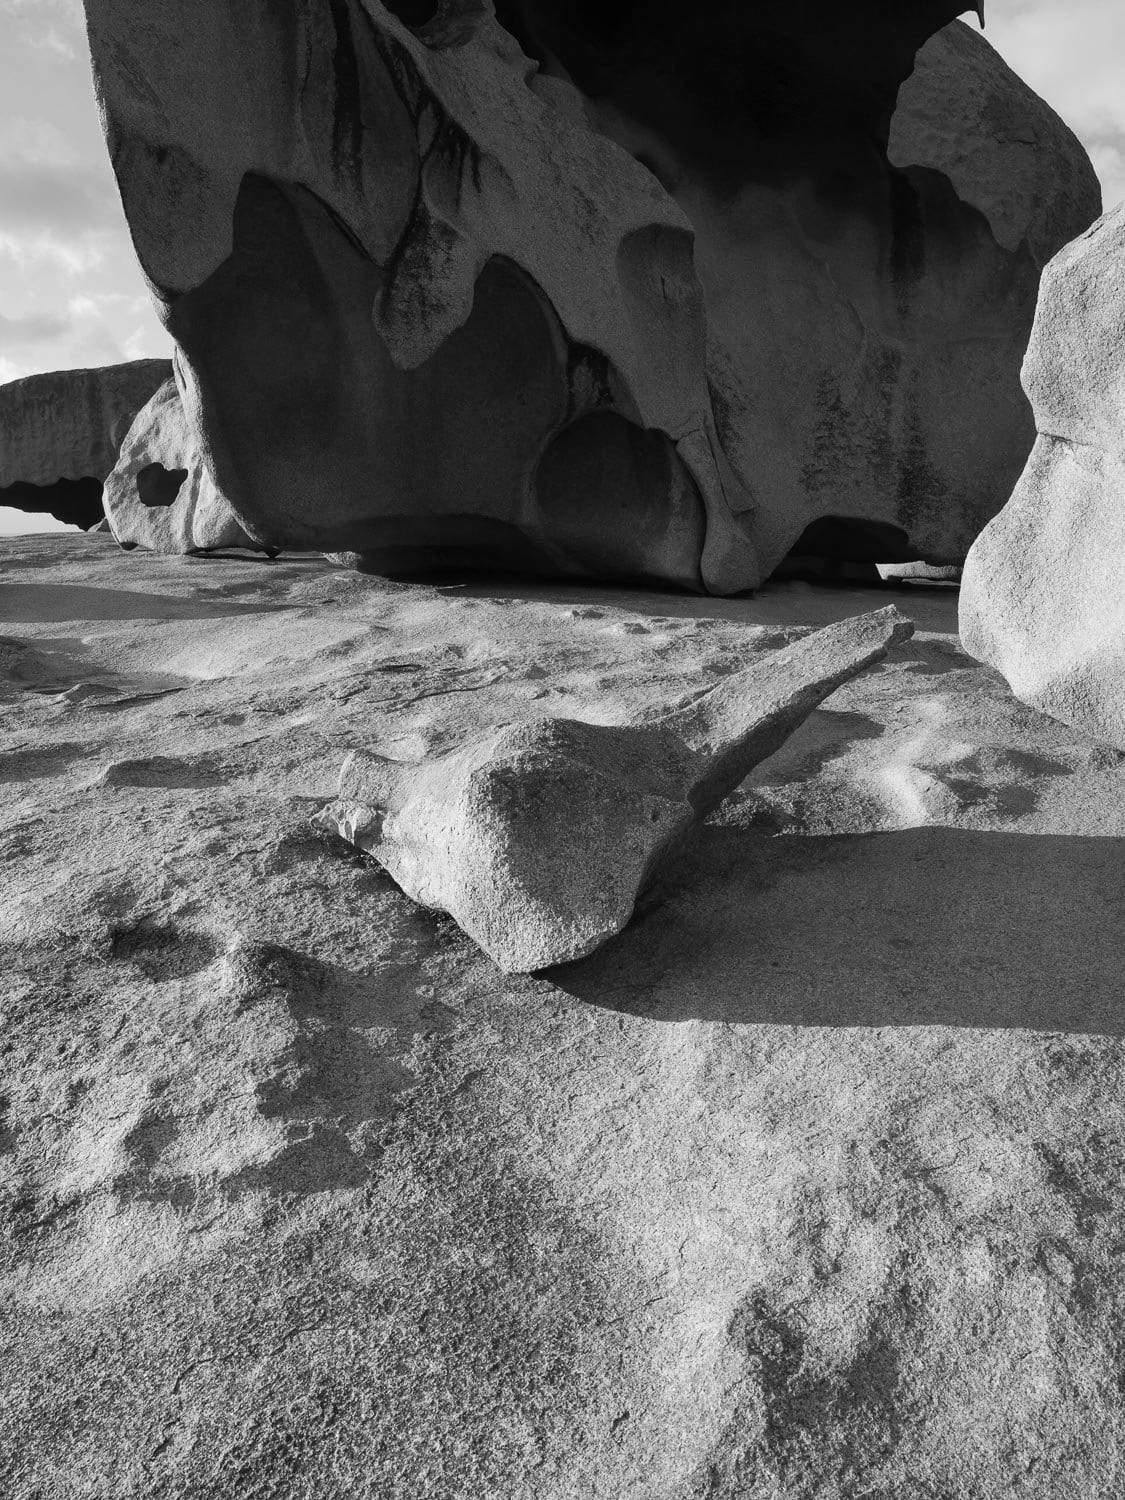 Large standing rocky mountains on a beach-like land, Remarkable Rocks #8 - Kangaroo Island SA